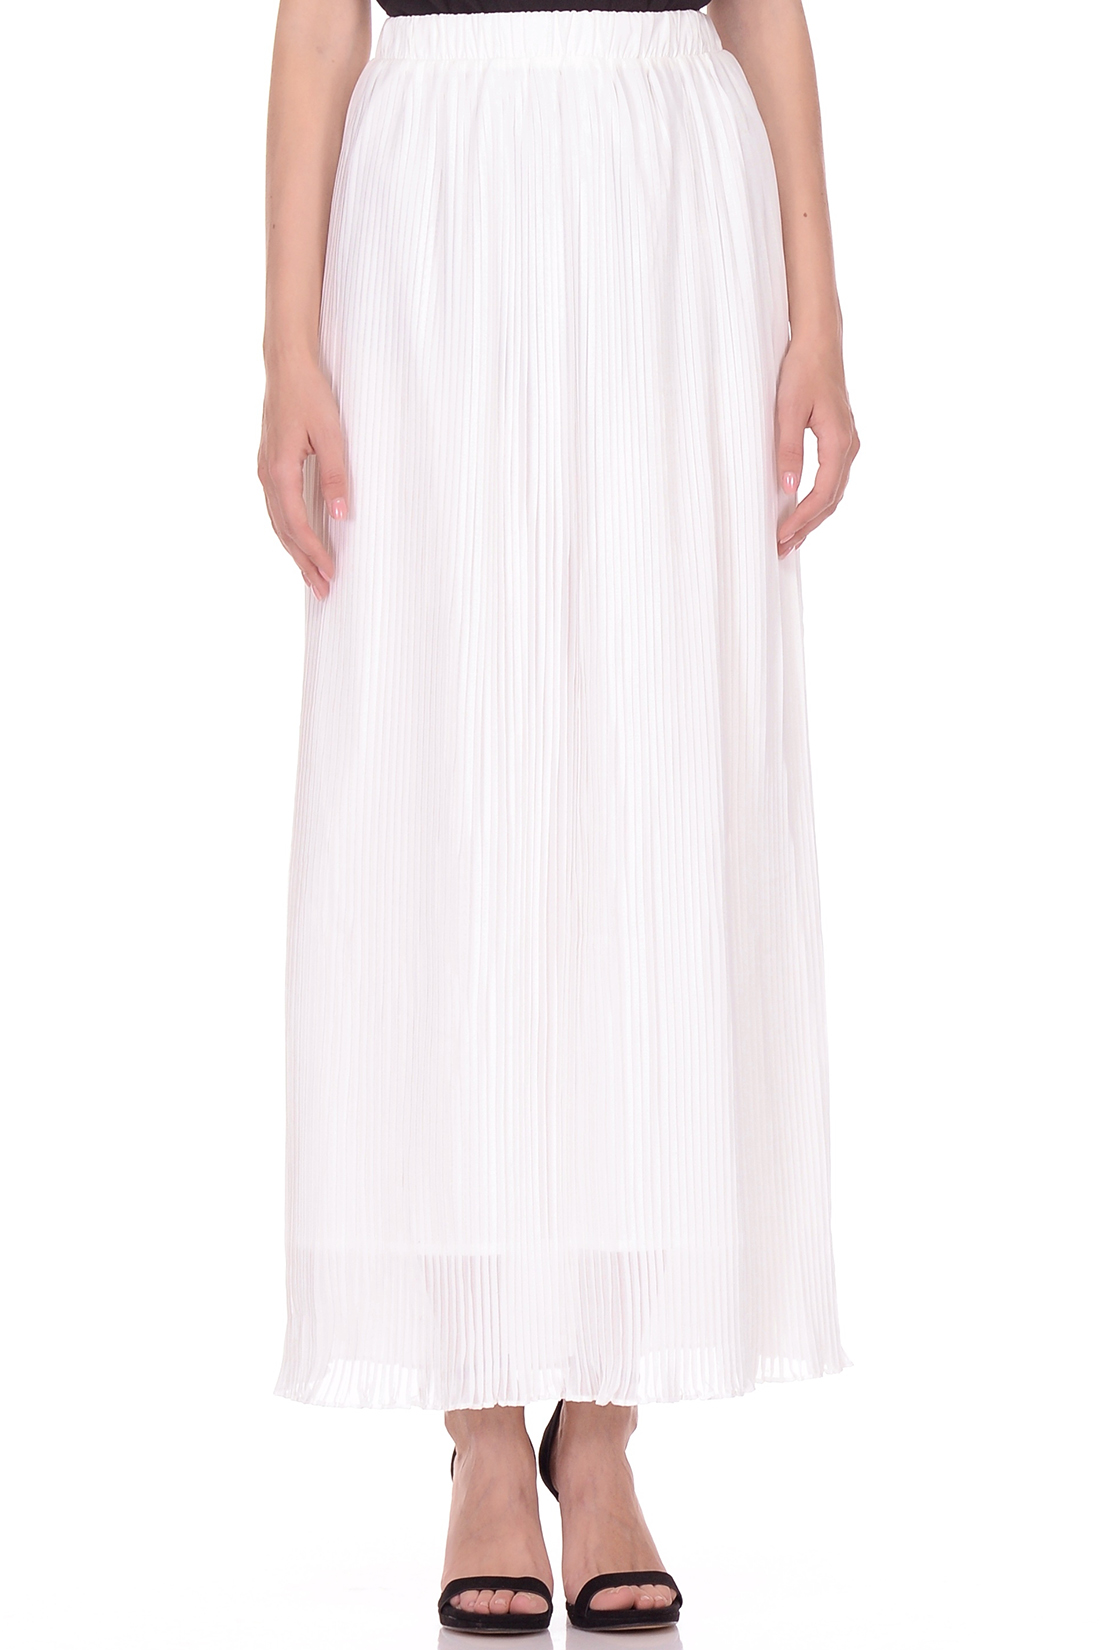 Длинная юбка-гофре (арт. baon B478036), размер XS, цвет белый Длинная юбка-гофре (арт. baon B478036) - фото 3